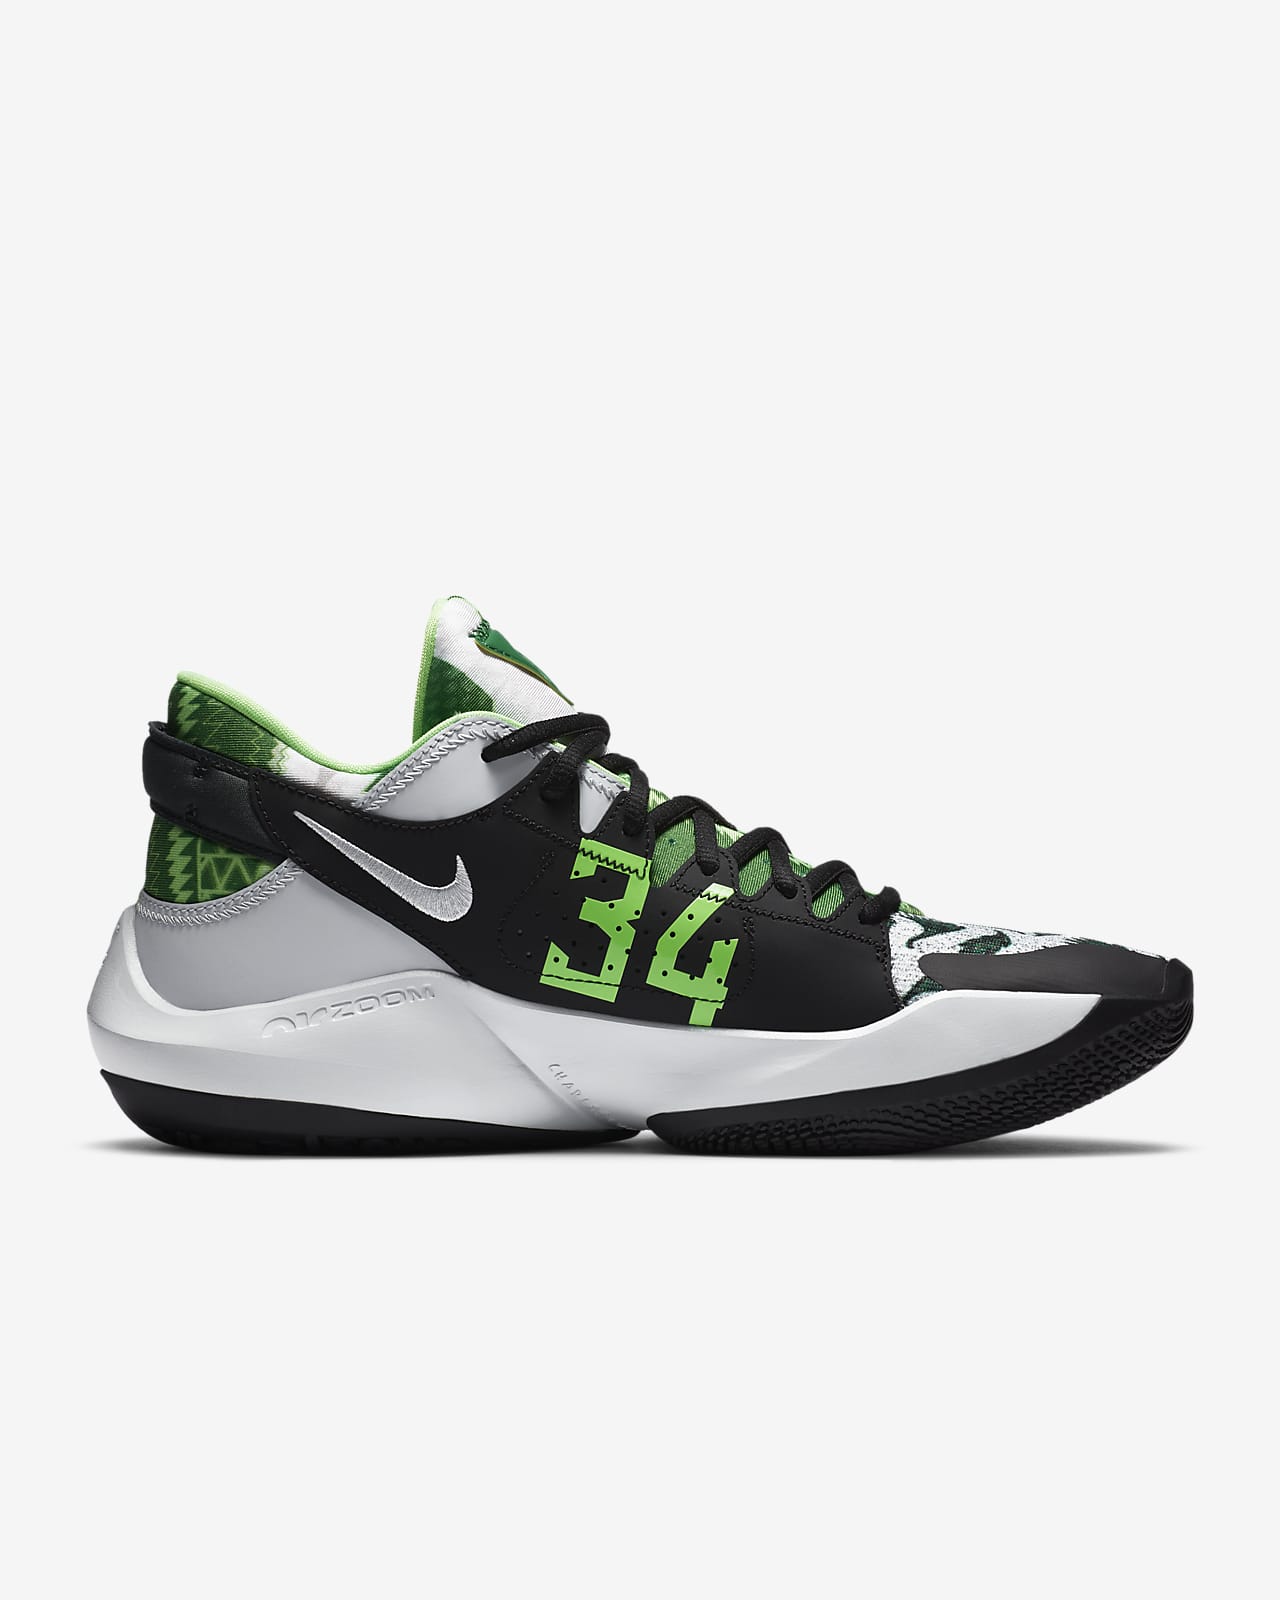 green nike basketball shoes